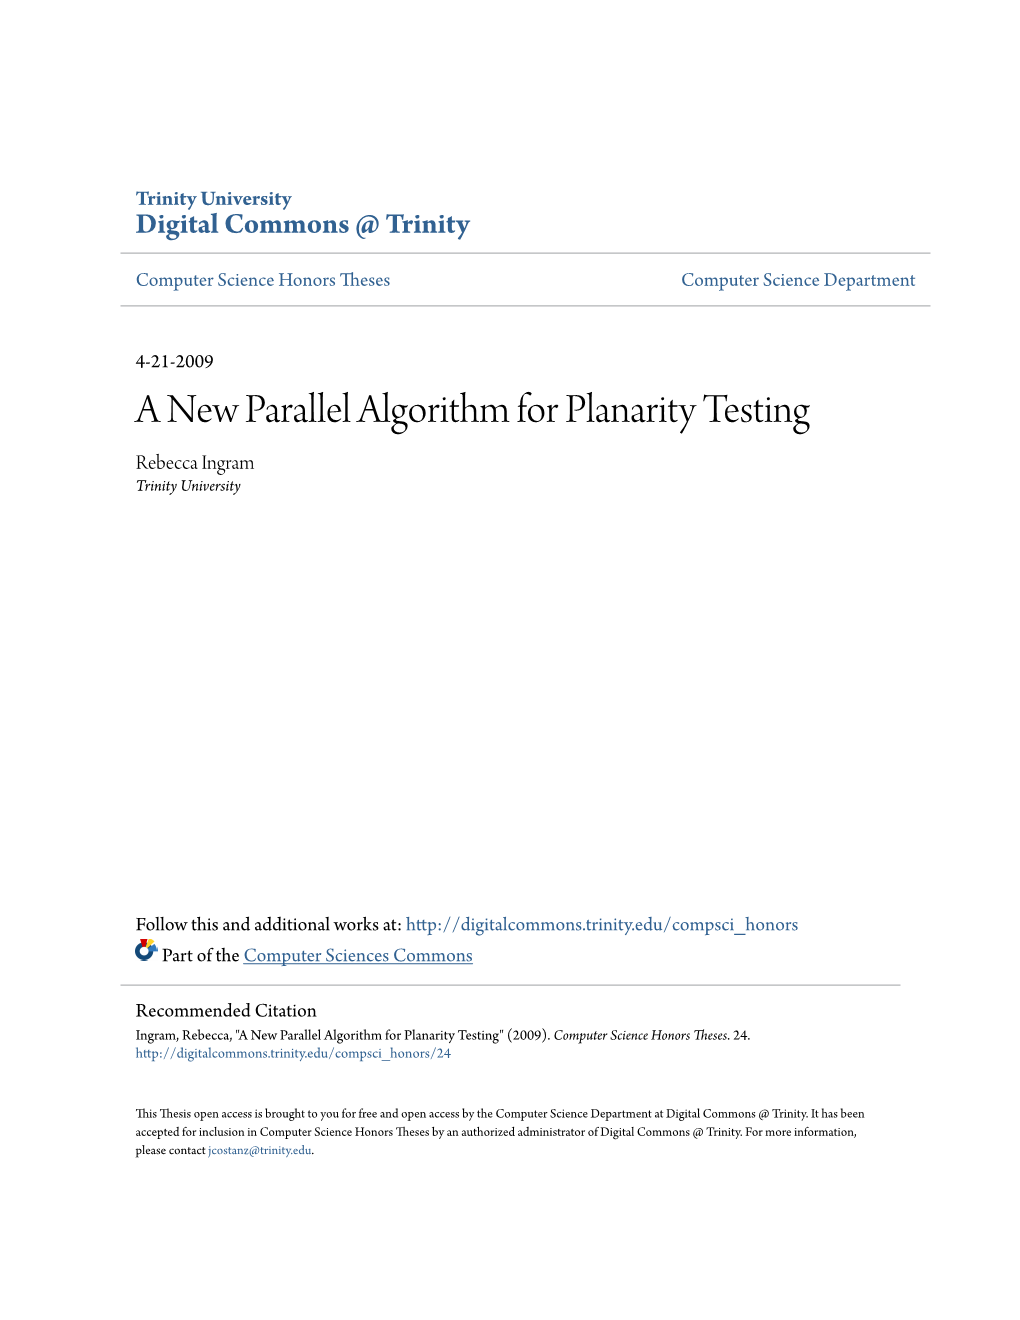 A New Parallel Algorithm for Planarity Testing Rebecca Ingram Trinity University